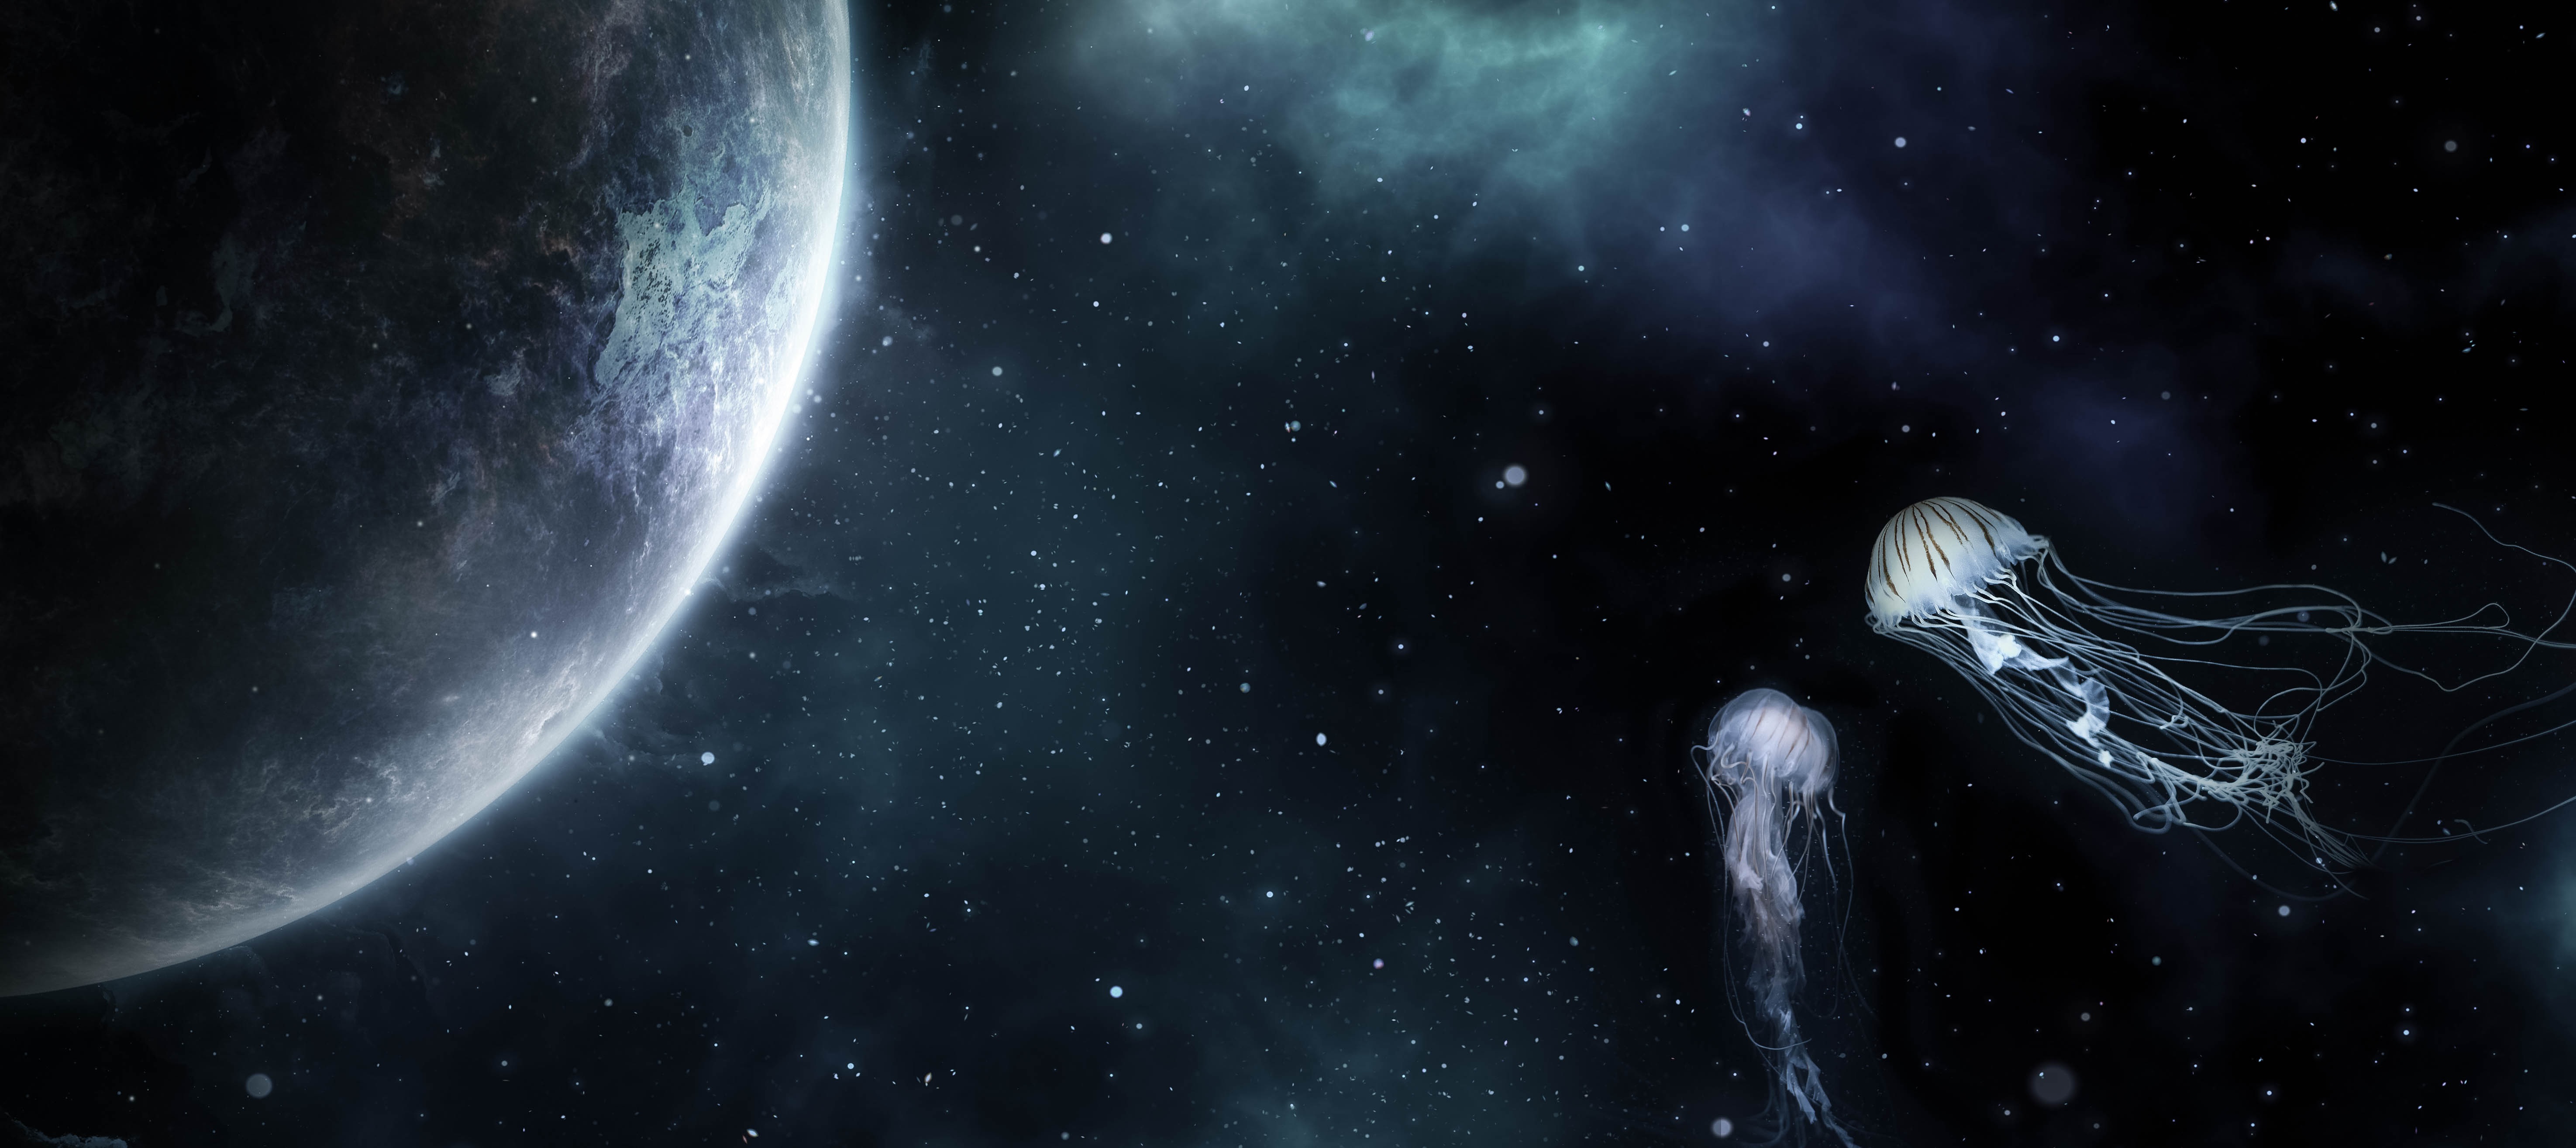 Descarga gratuita de fondo de pantalla para móvil de Medusa, Espacio, Planeta, Ciencia Ficción.